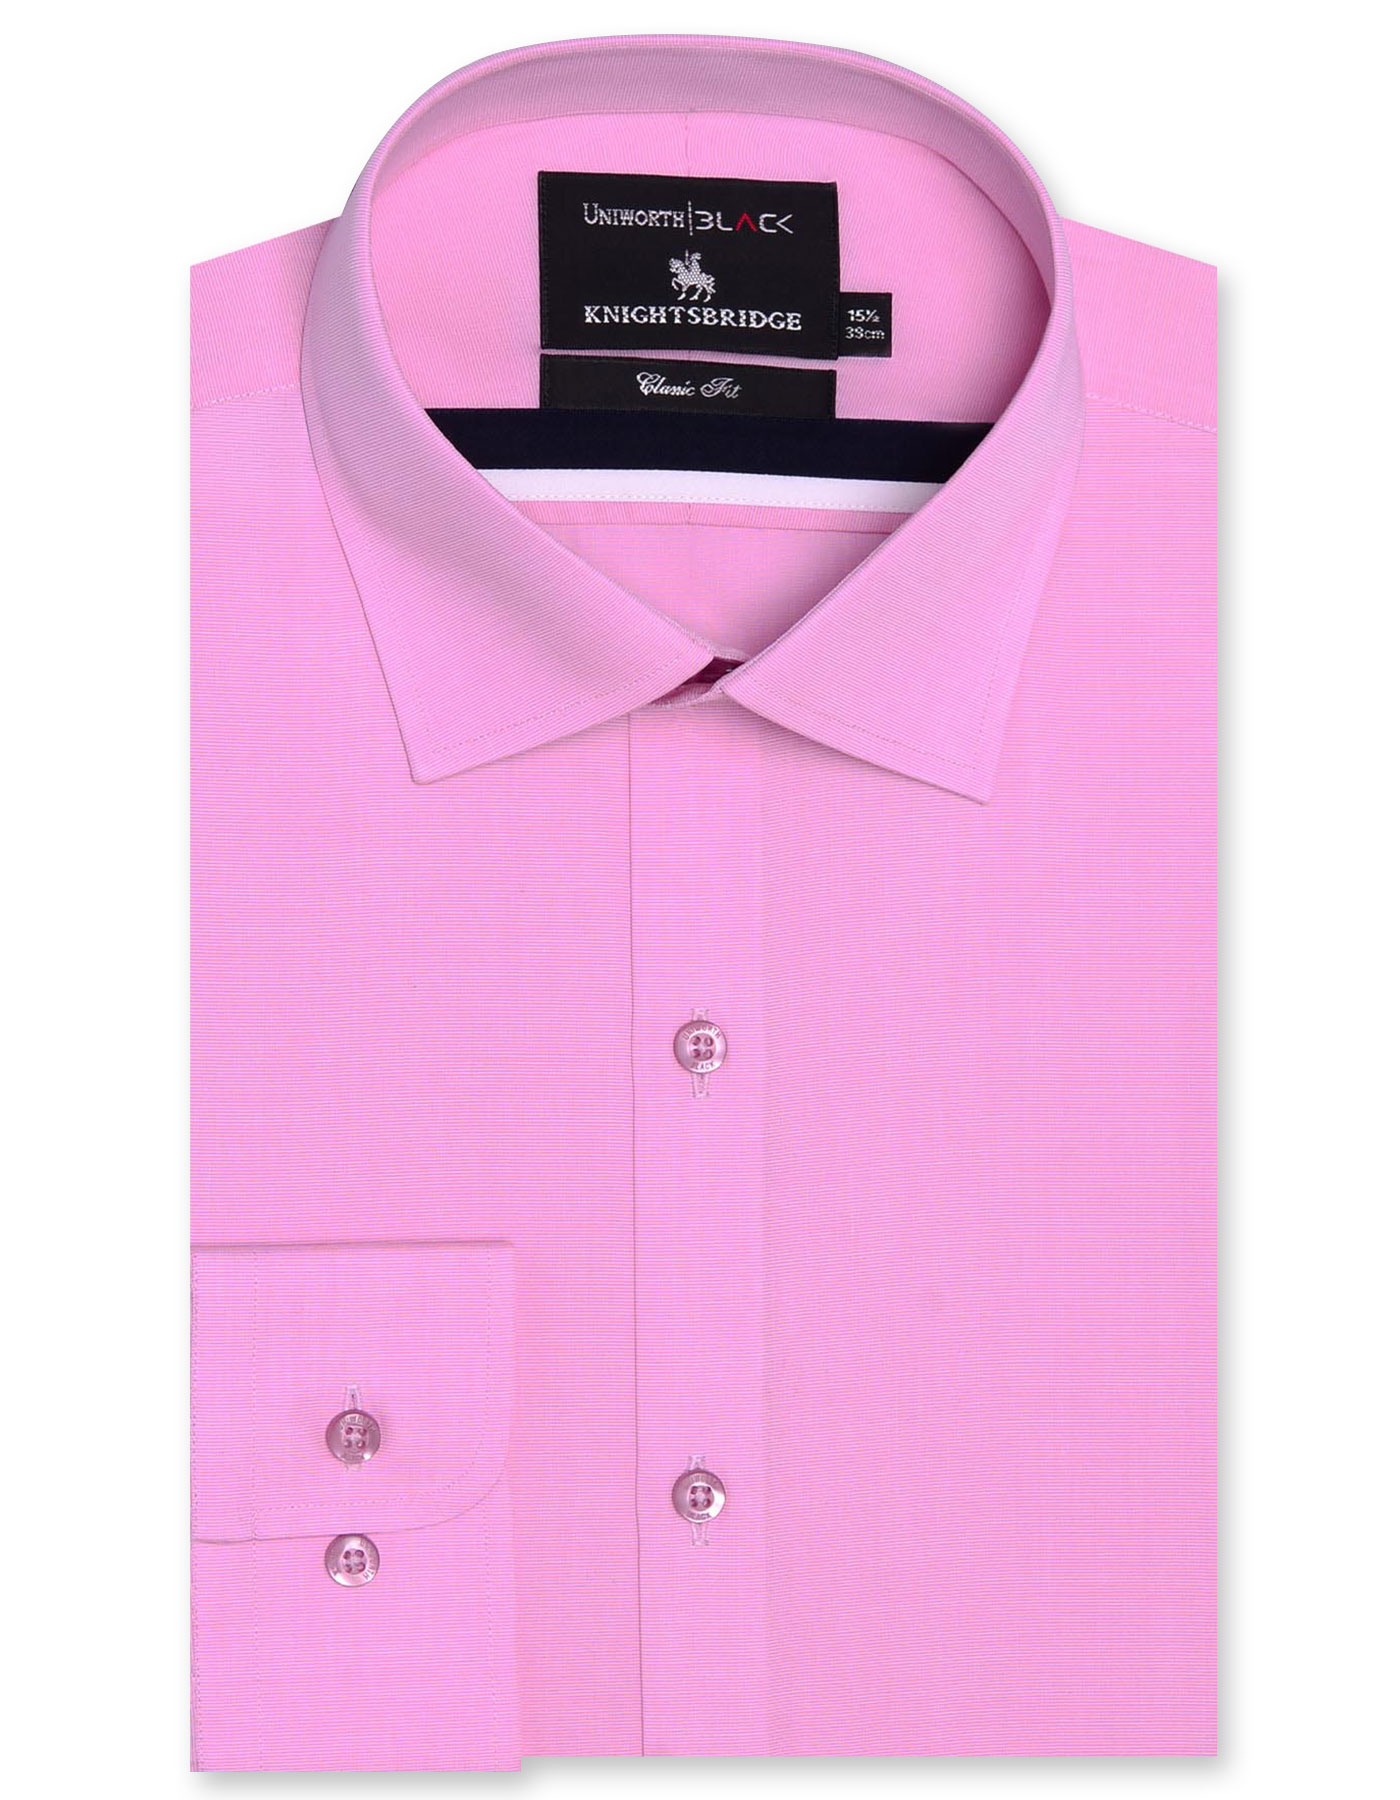 Buy Pink Formal Shirt for Men Online Shopping In Pakistan | Uniworth